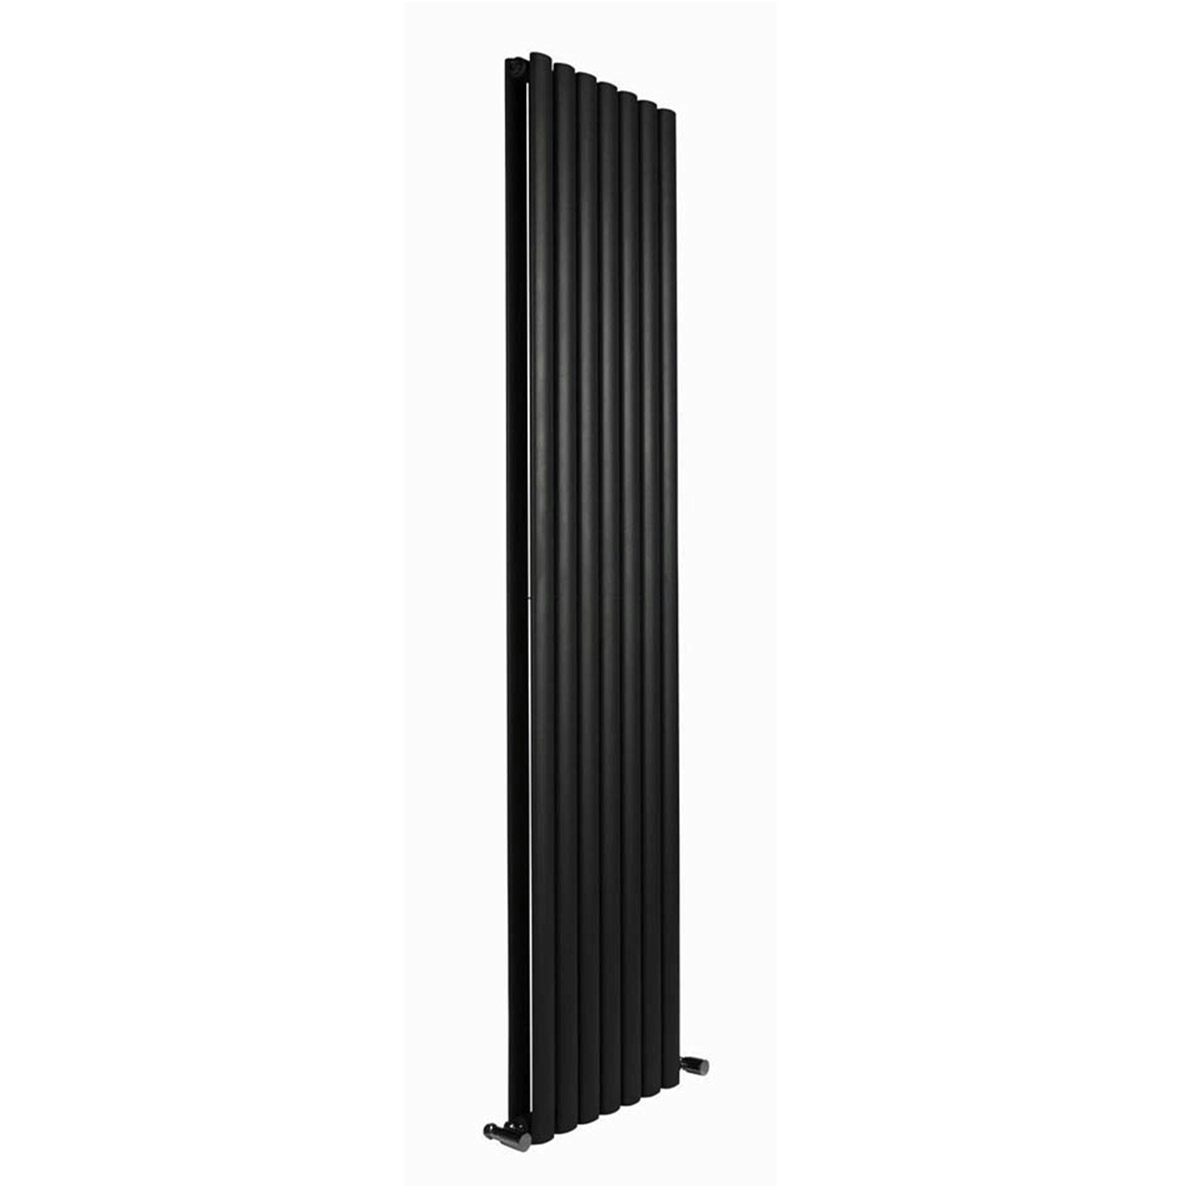 Reina Neva anthracite grey double vertical steel designer radiator 1500 x 295